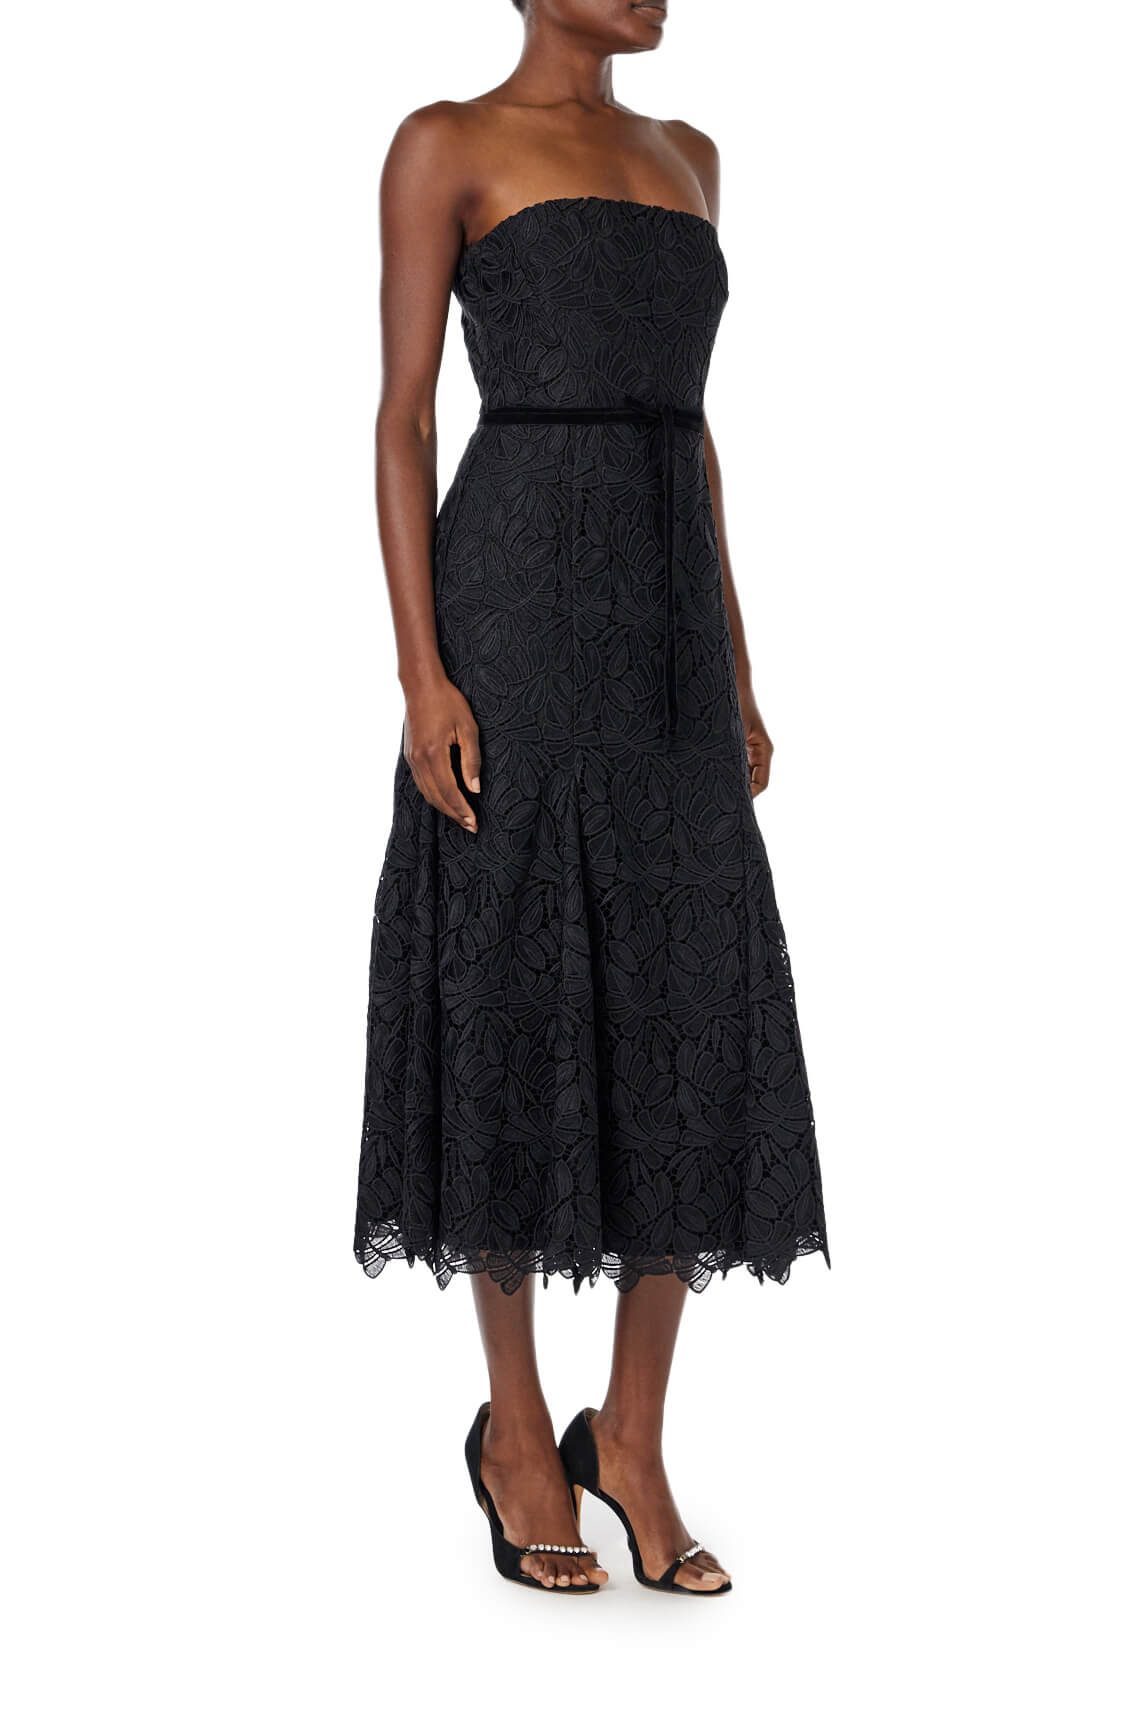 ML Monique Lhuillier strapless black lace dress with ribbon accent at waist.